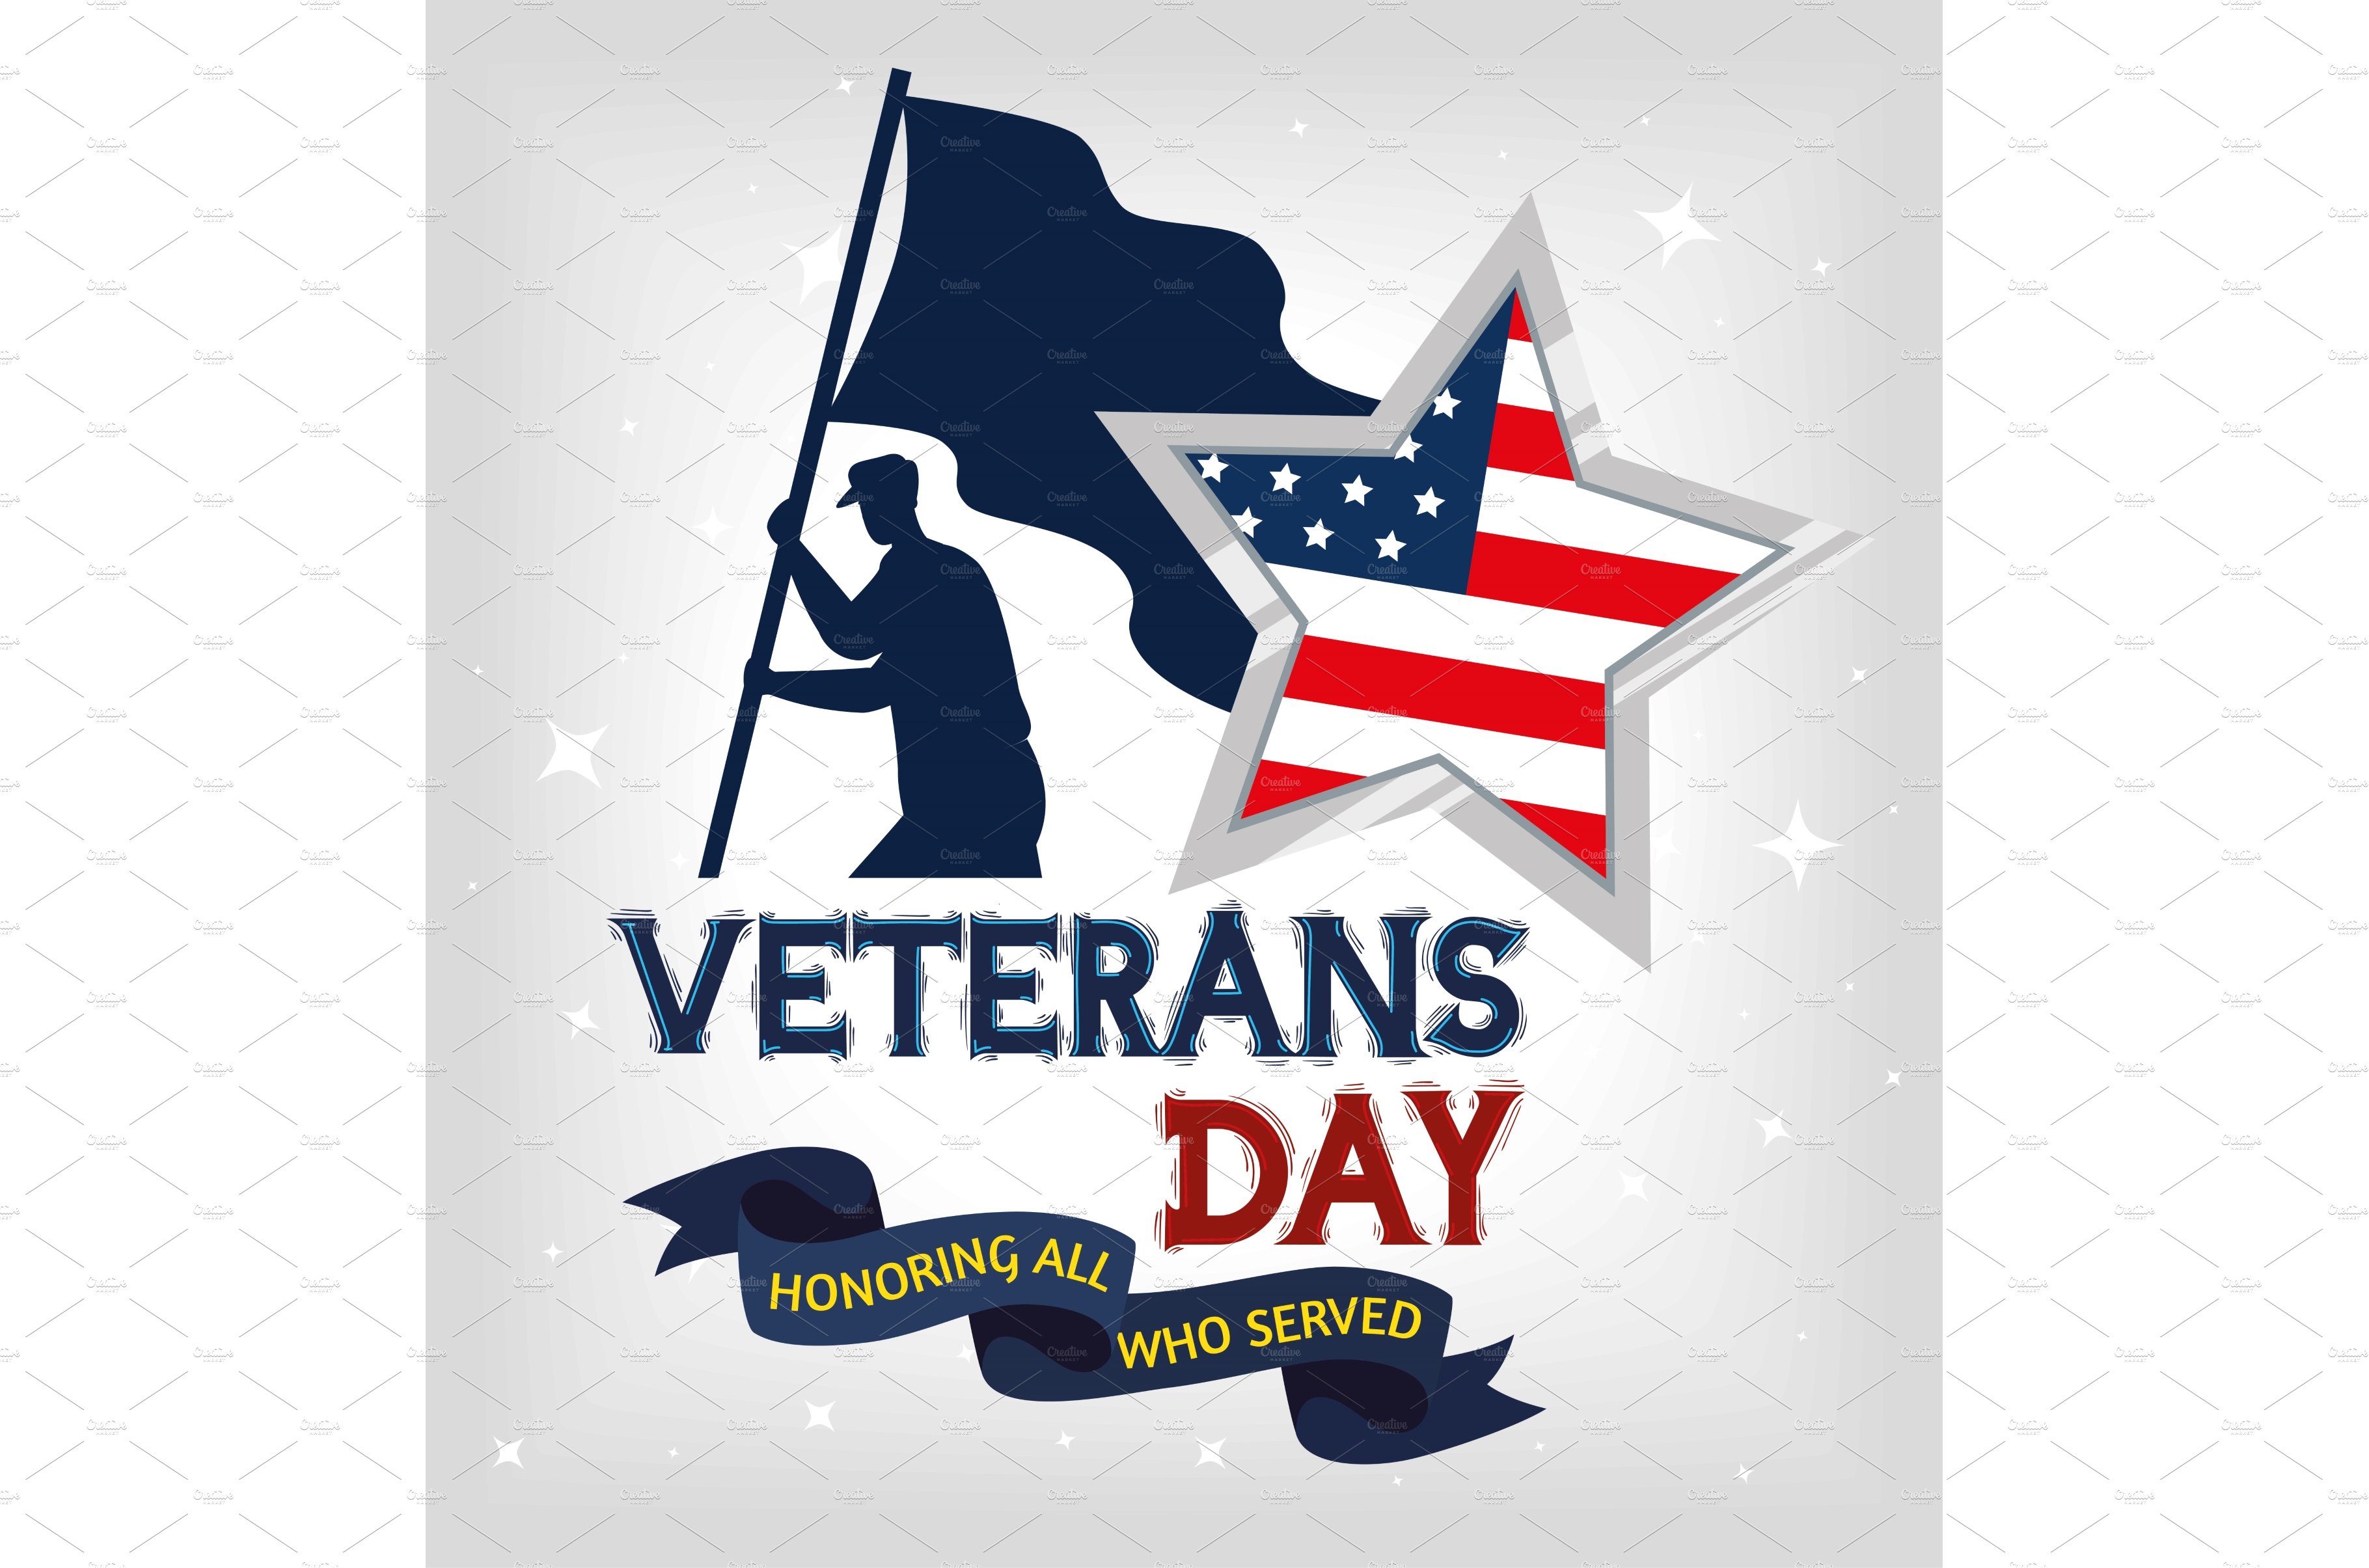 veterans day lattering postcard cover image.